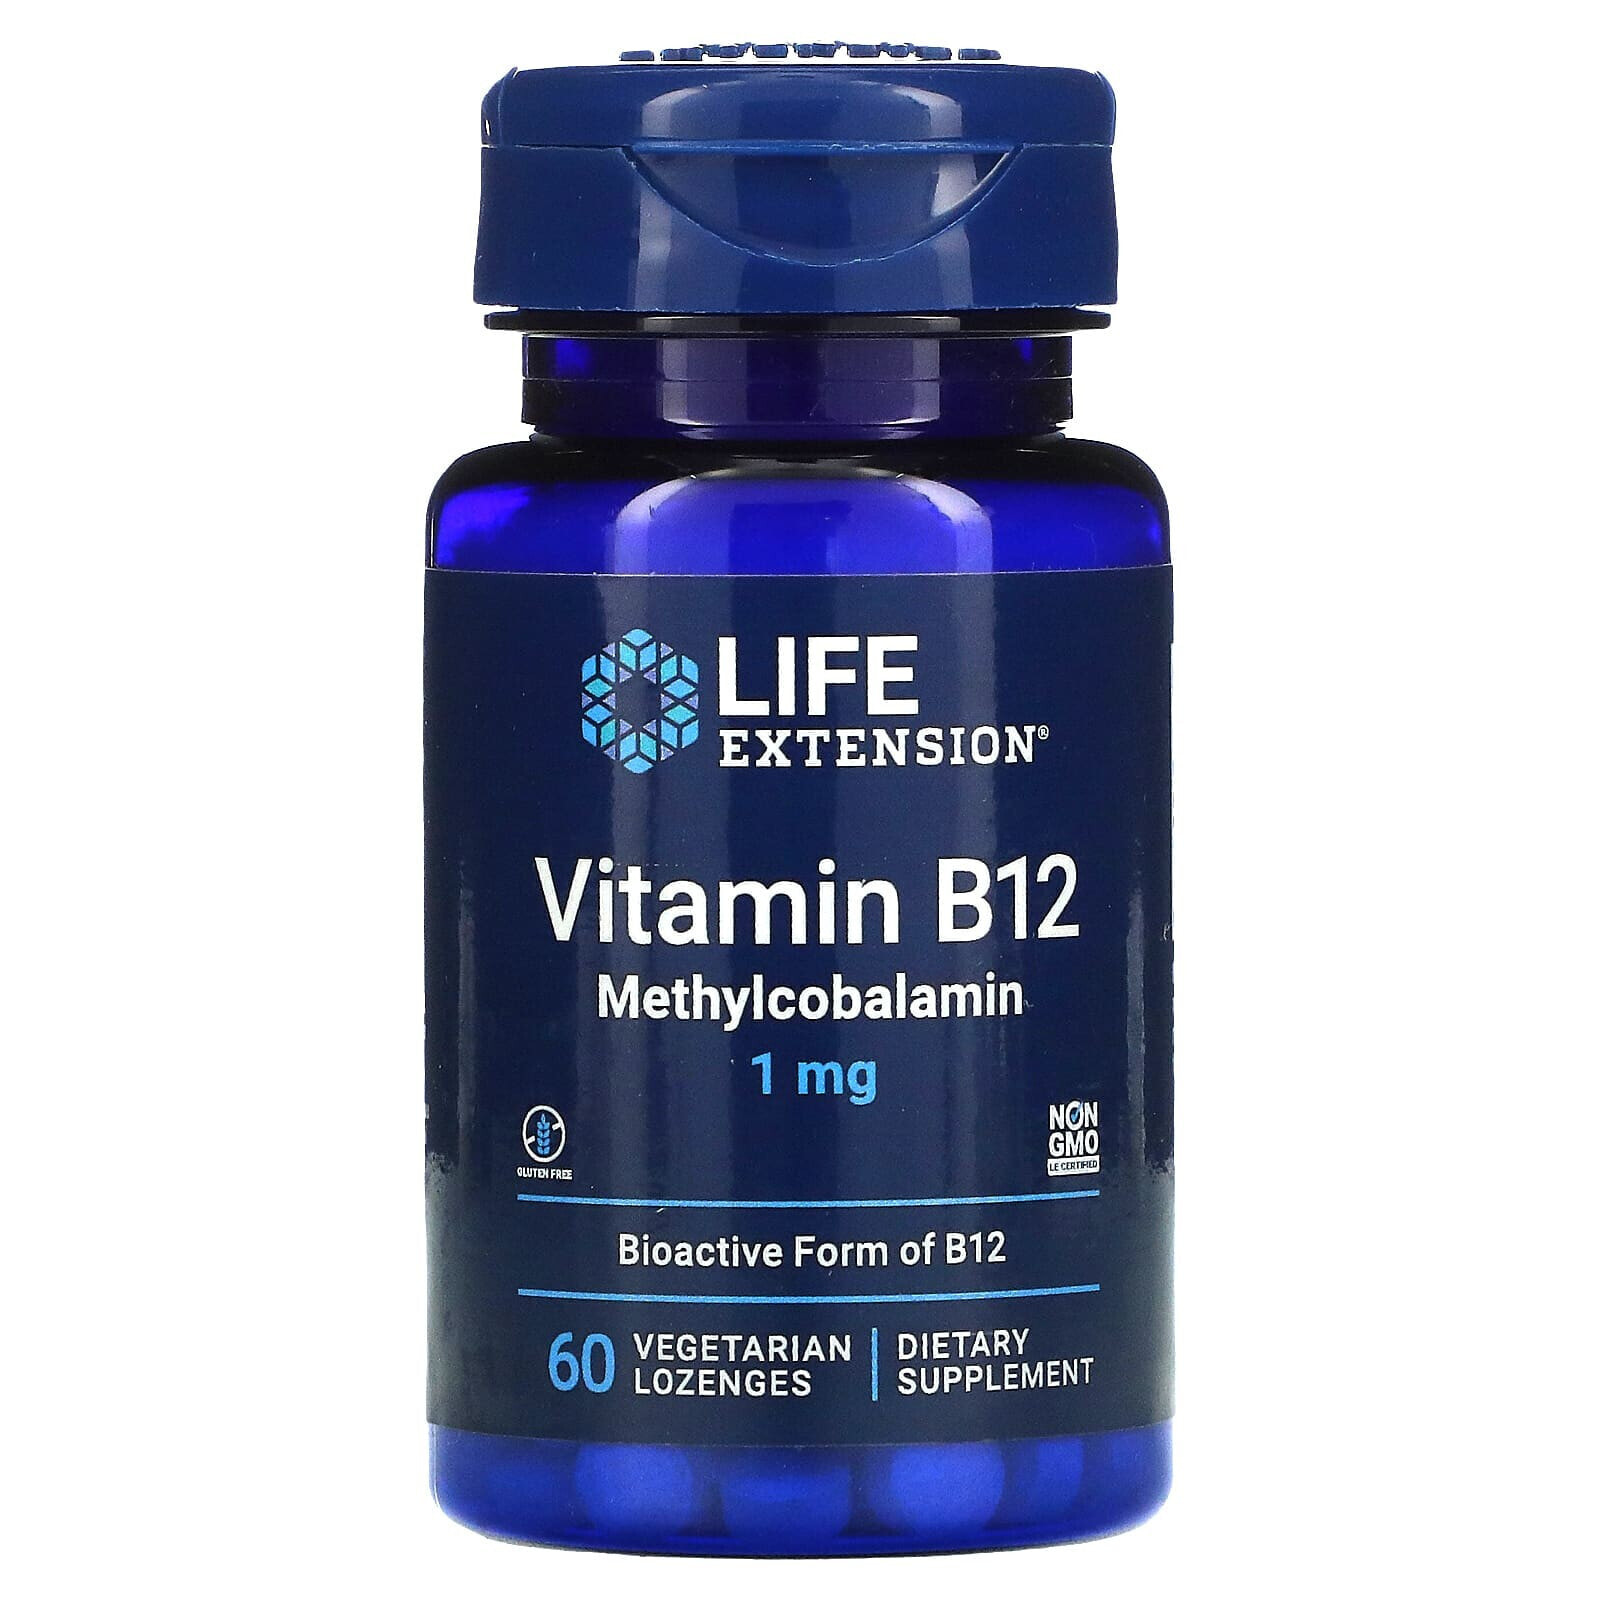 Life Extension, Vitamin B12, Methylcobalamin, 500 mcg, 100 Vegetarian Lozenges